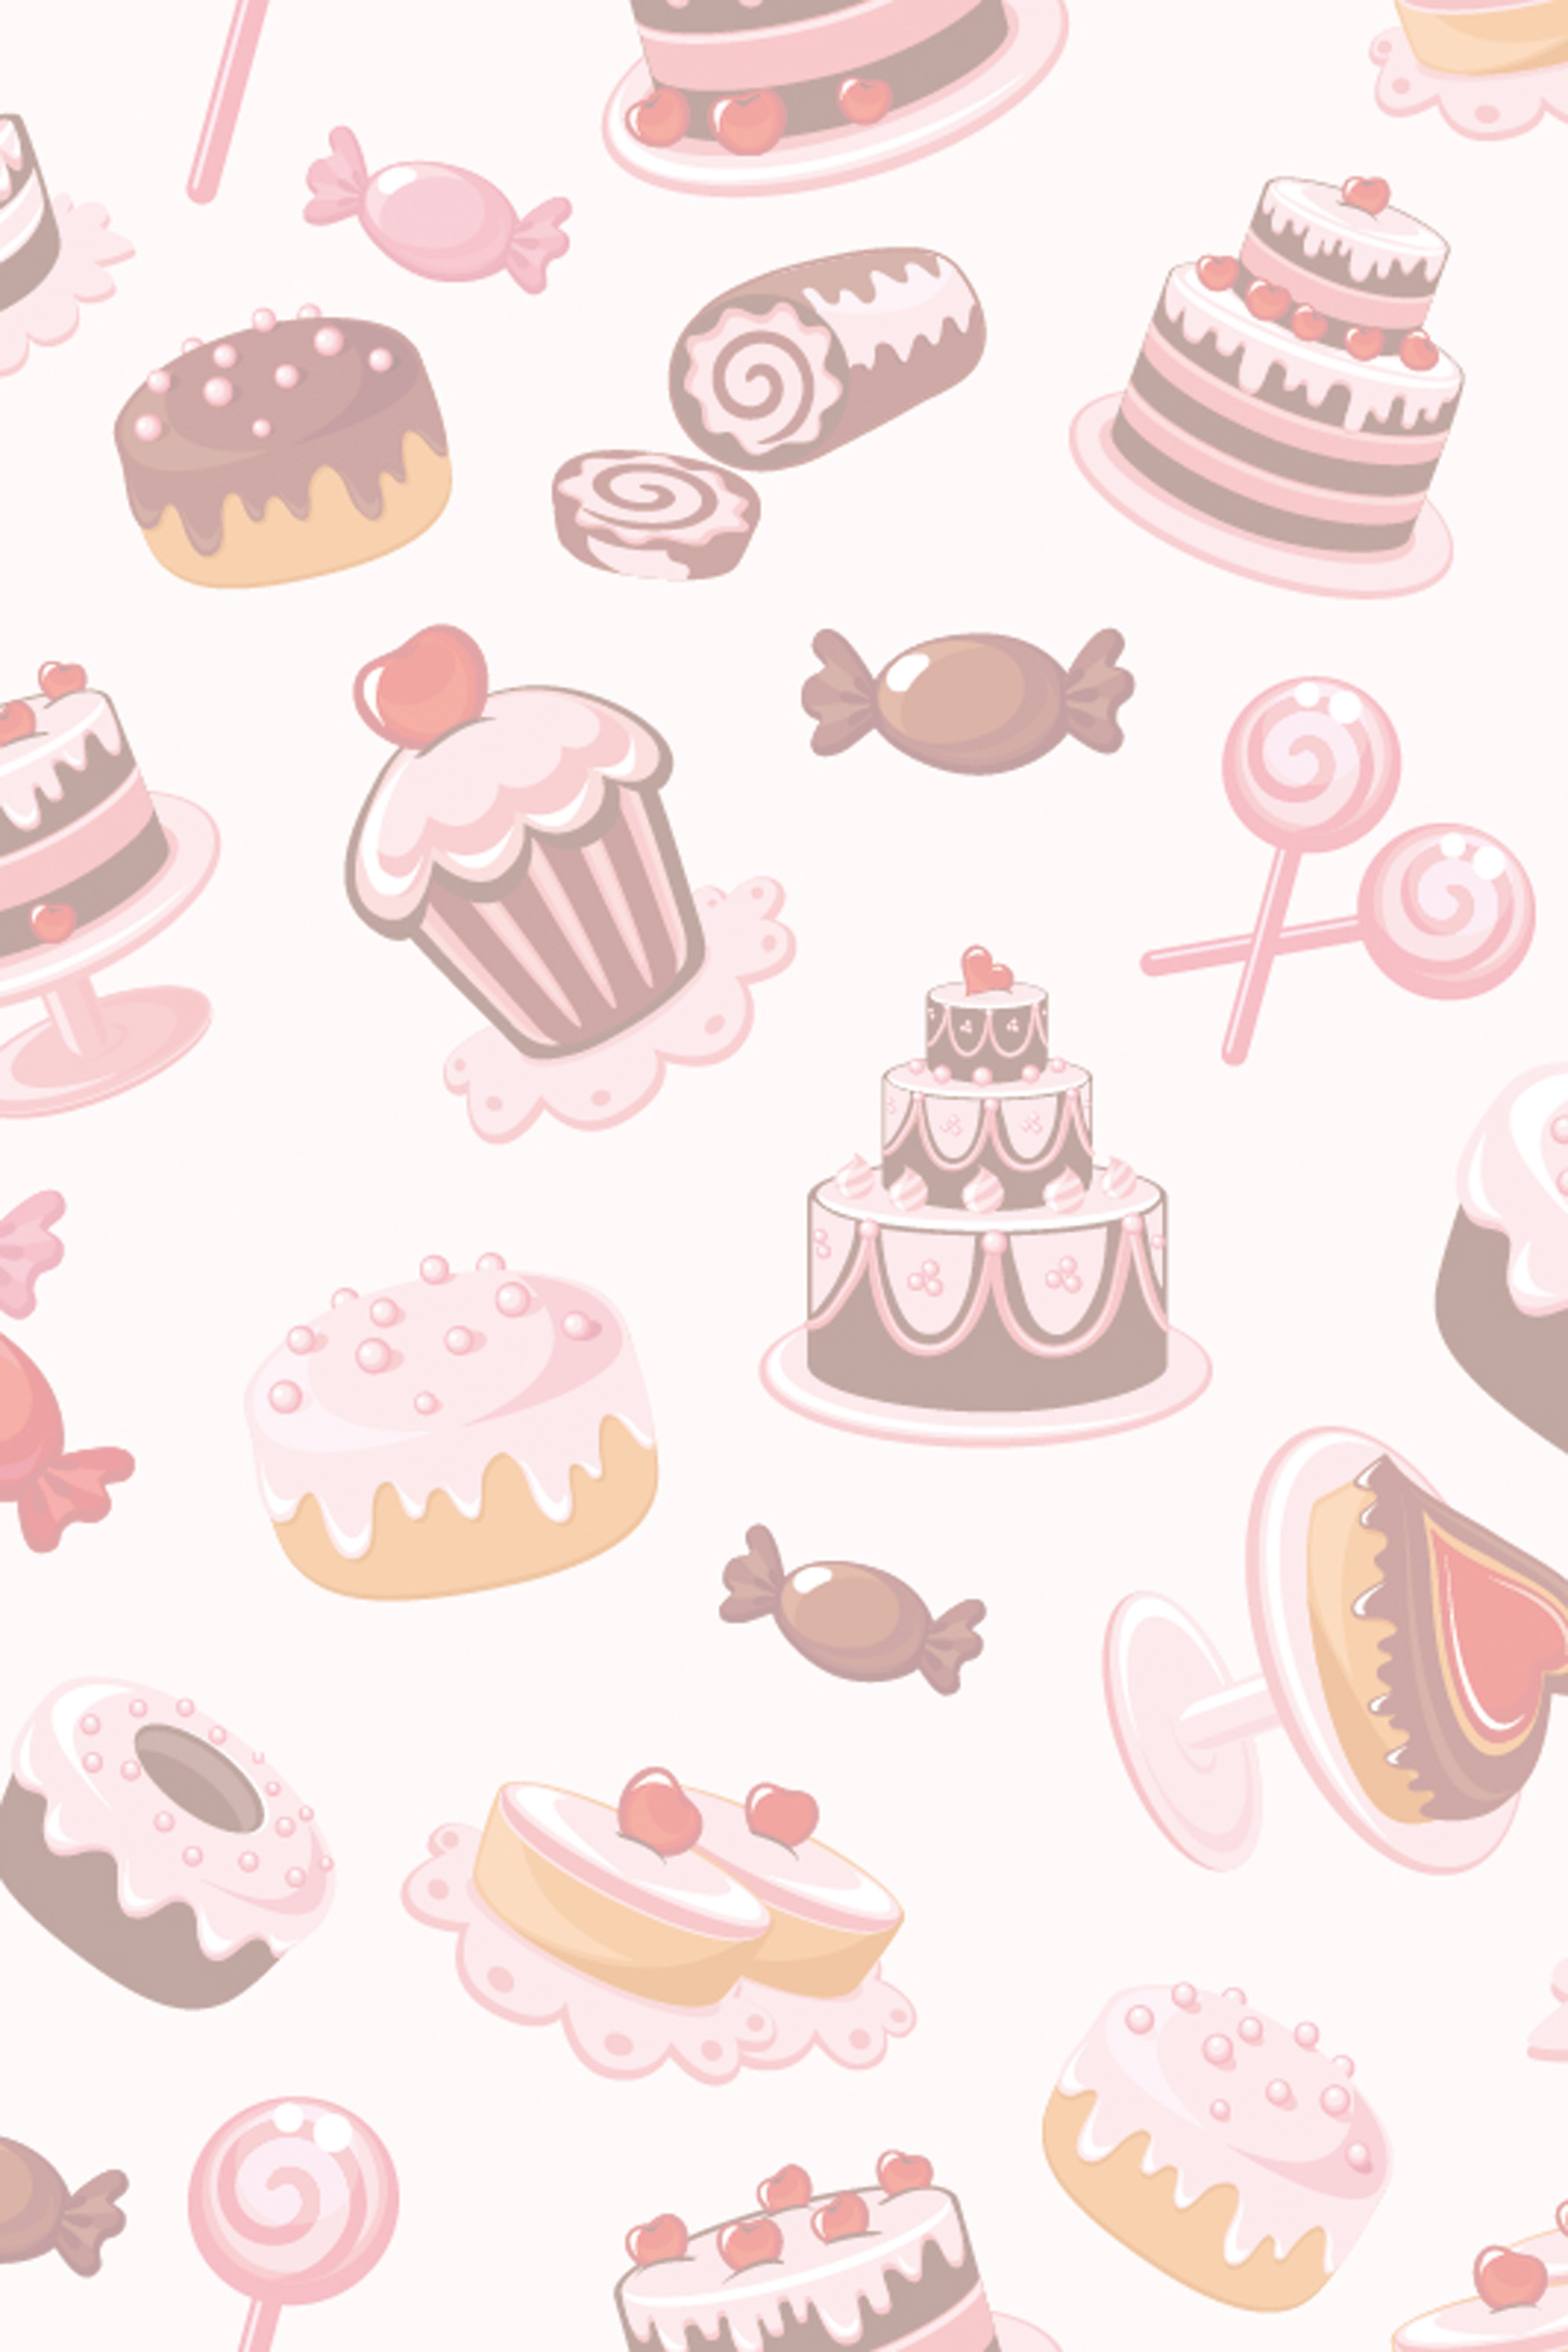 Dessert Background. Cupcakes wallpaper, Cake wallpaper, Baking wallpaper